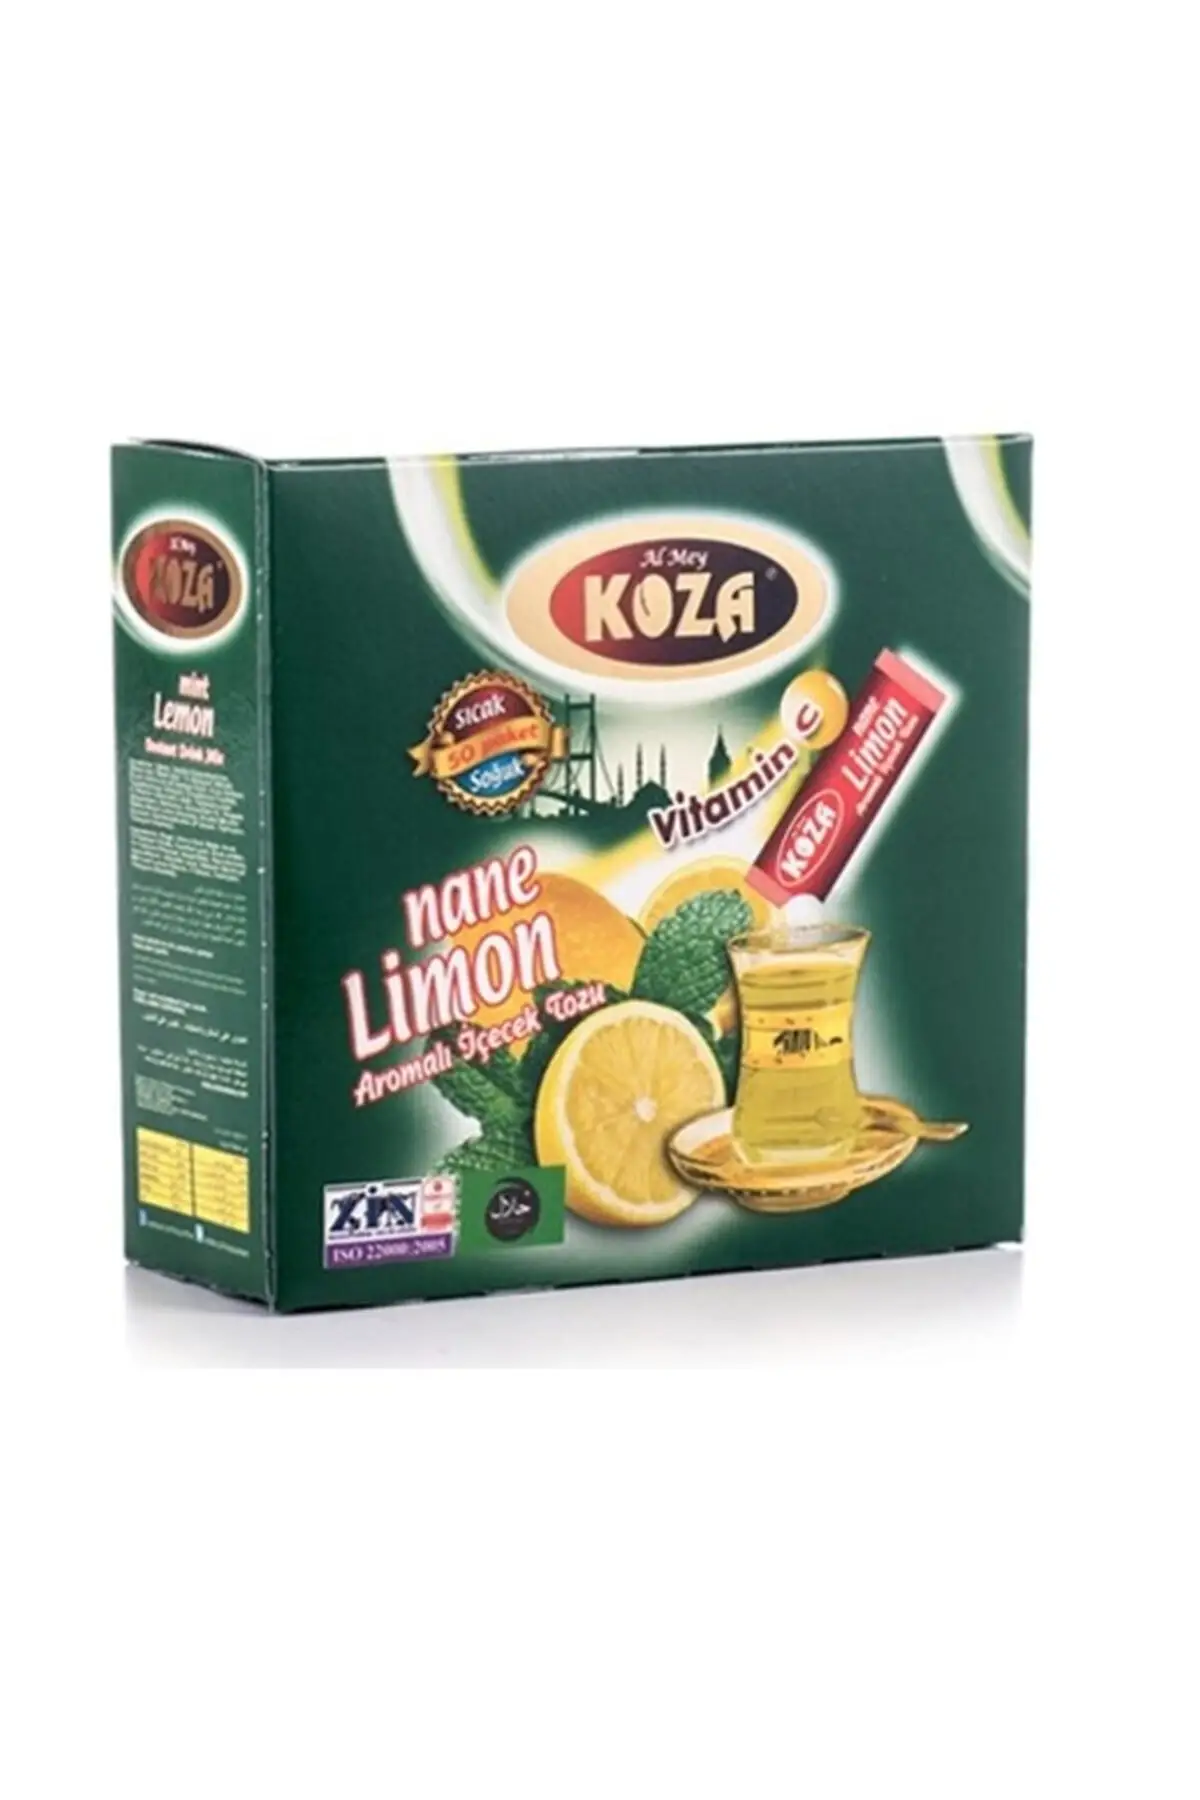 Turkish Disposable Mint Lemon Flavored Powder Drink 1 box 50 Stick